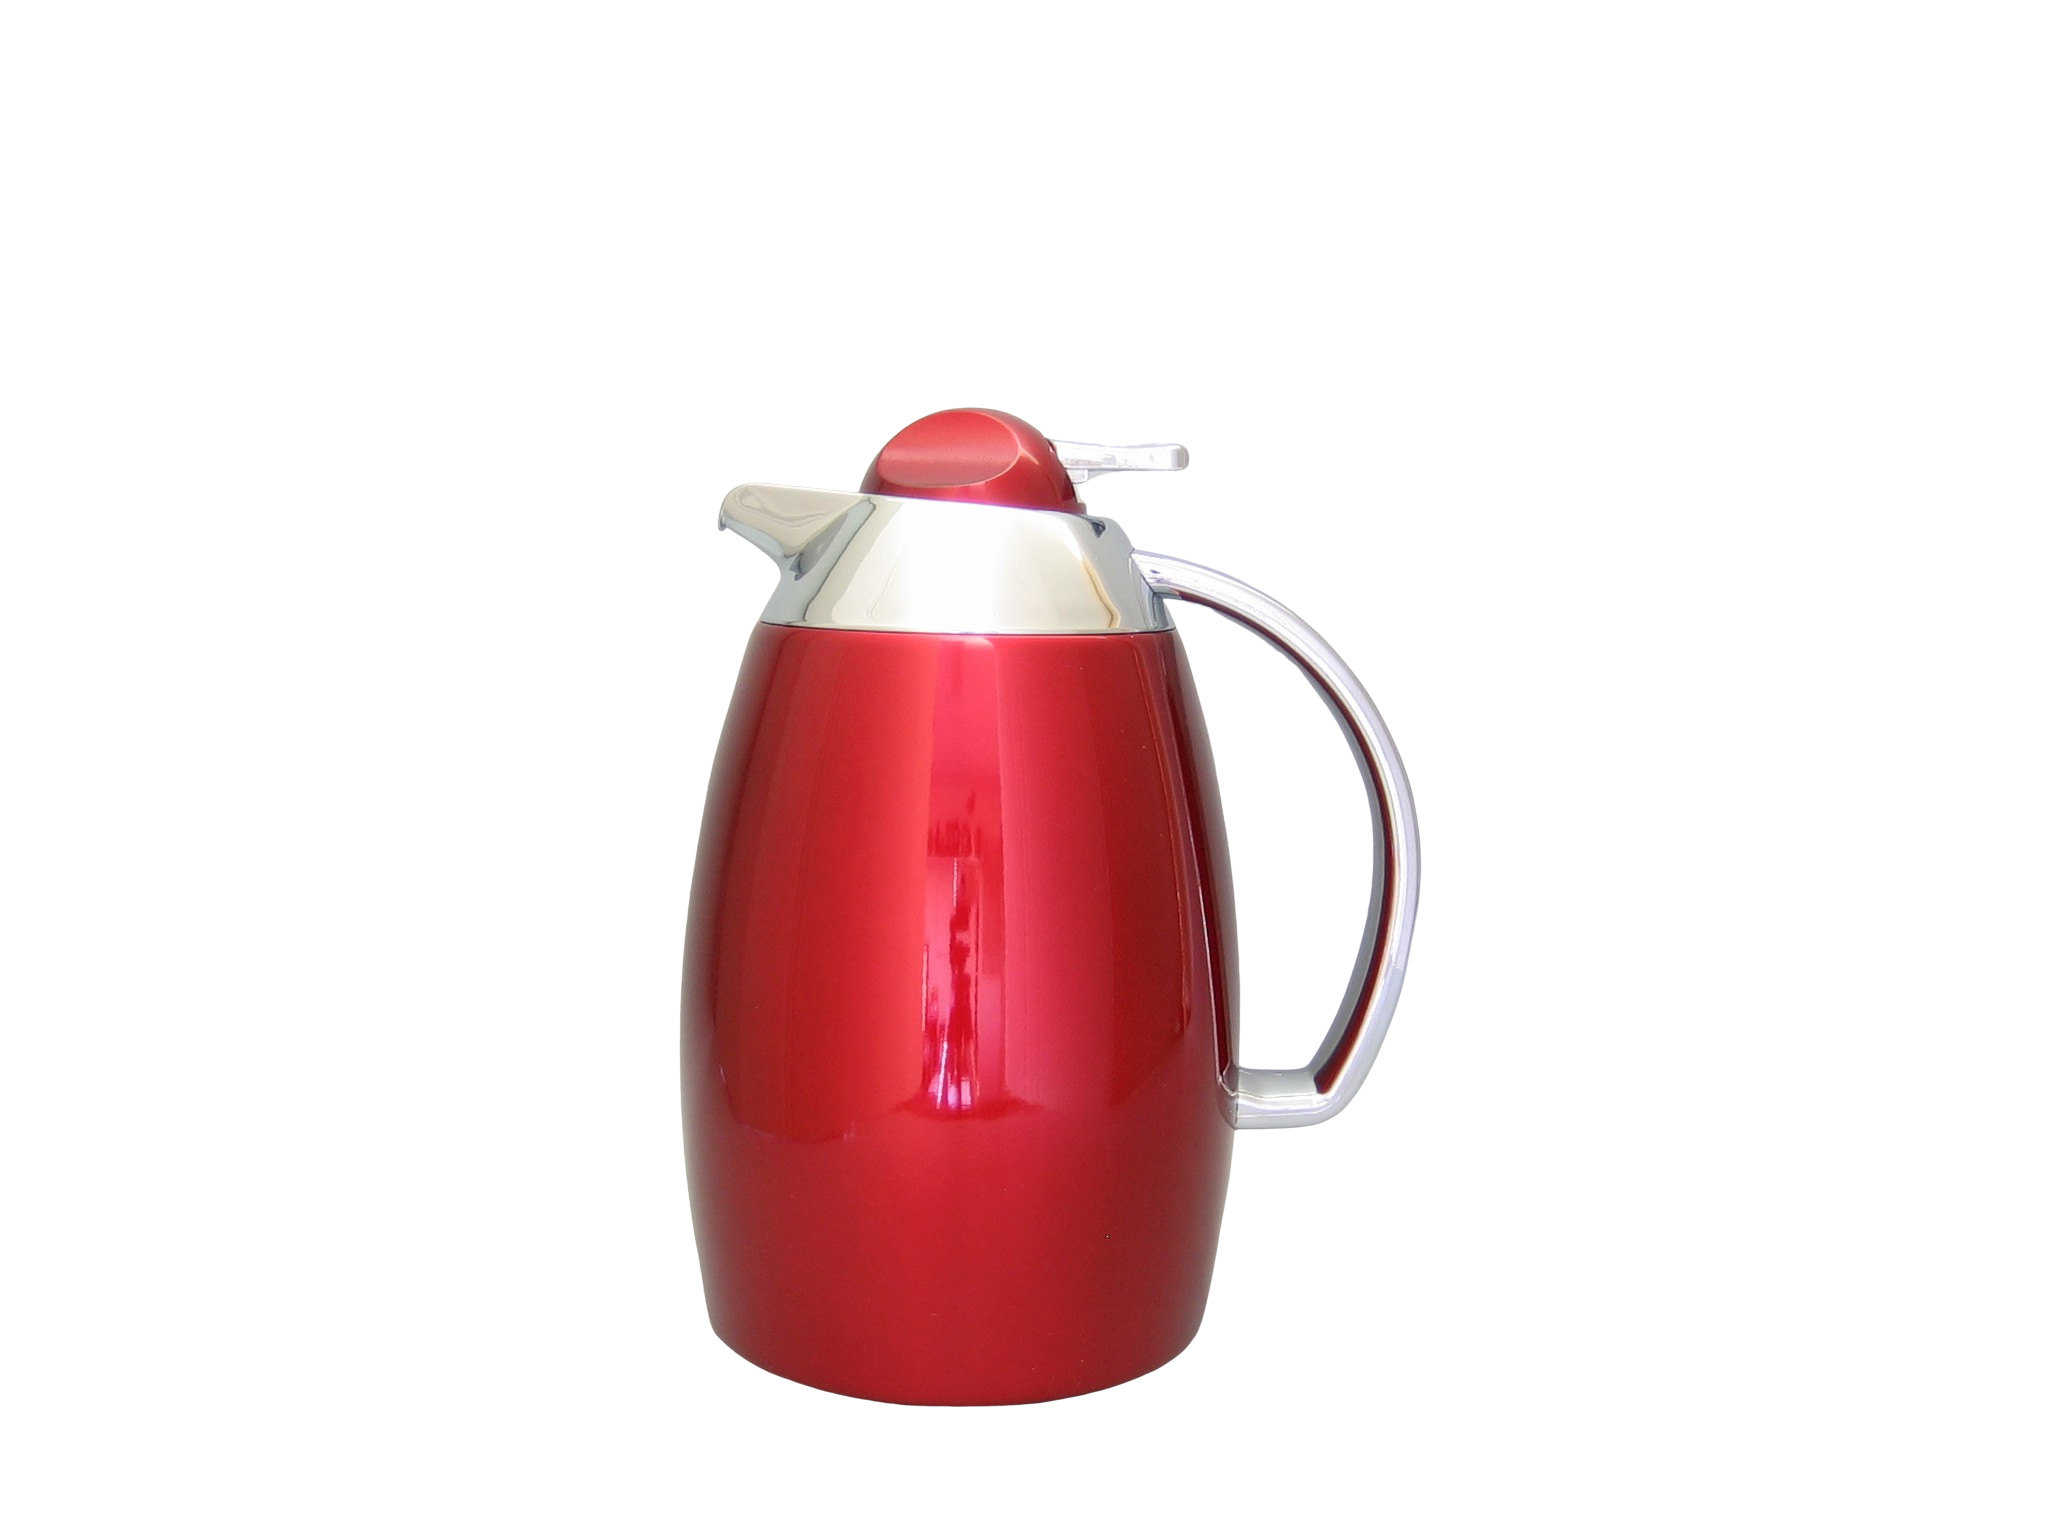 OPERA15-072 - Vacuum carafe SS unbreakable red 1.5 L - Isobel